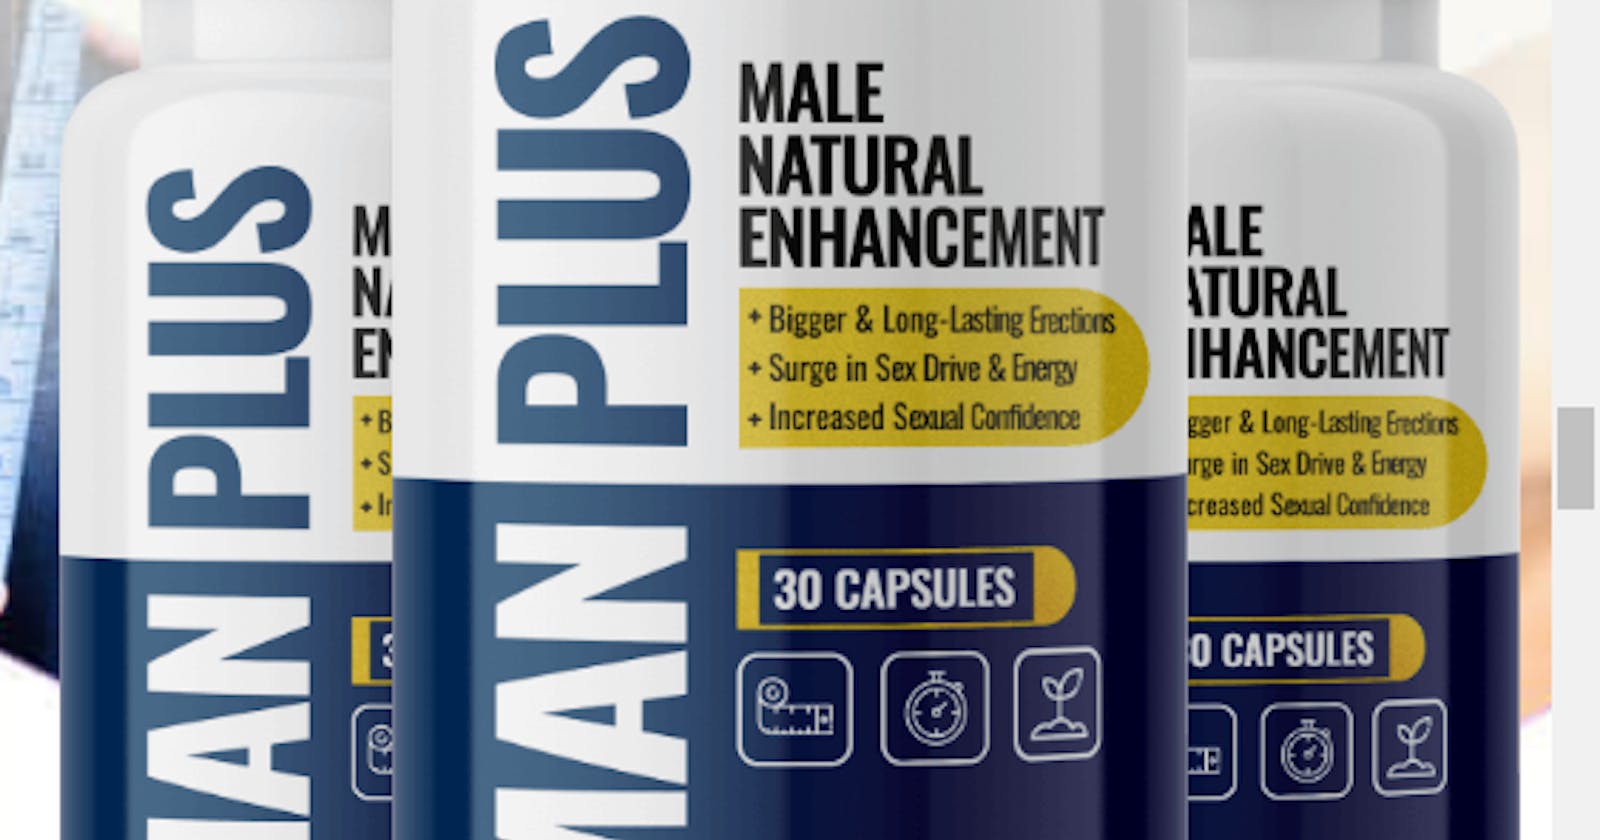 ManPlus Male Enhancement Pills Review - Is Man Plus Supplement Safe or Scam?